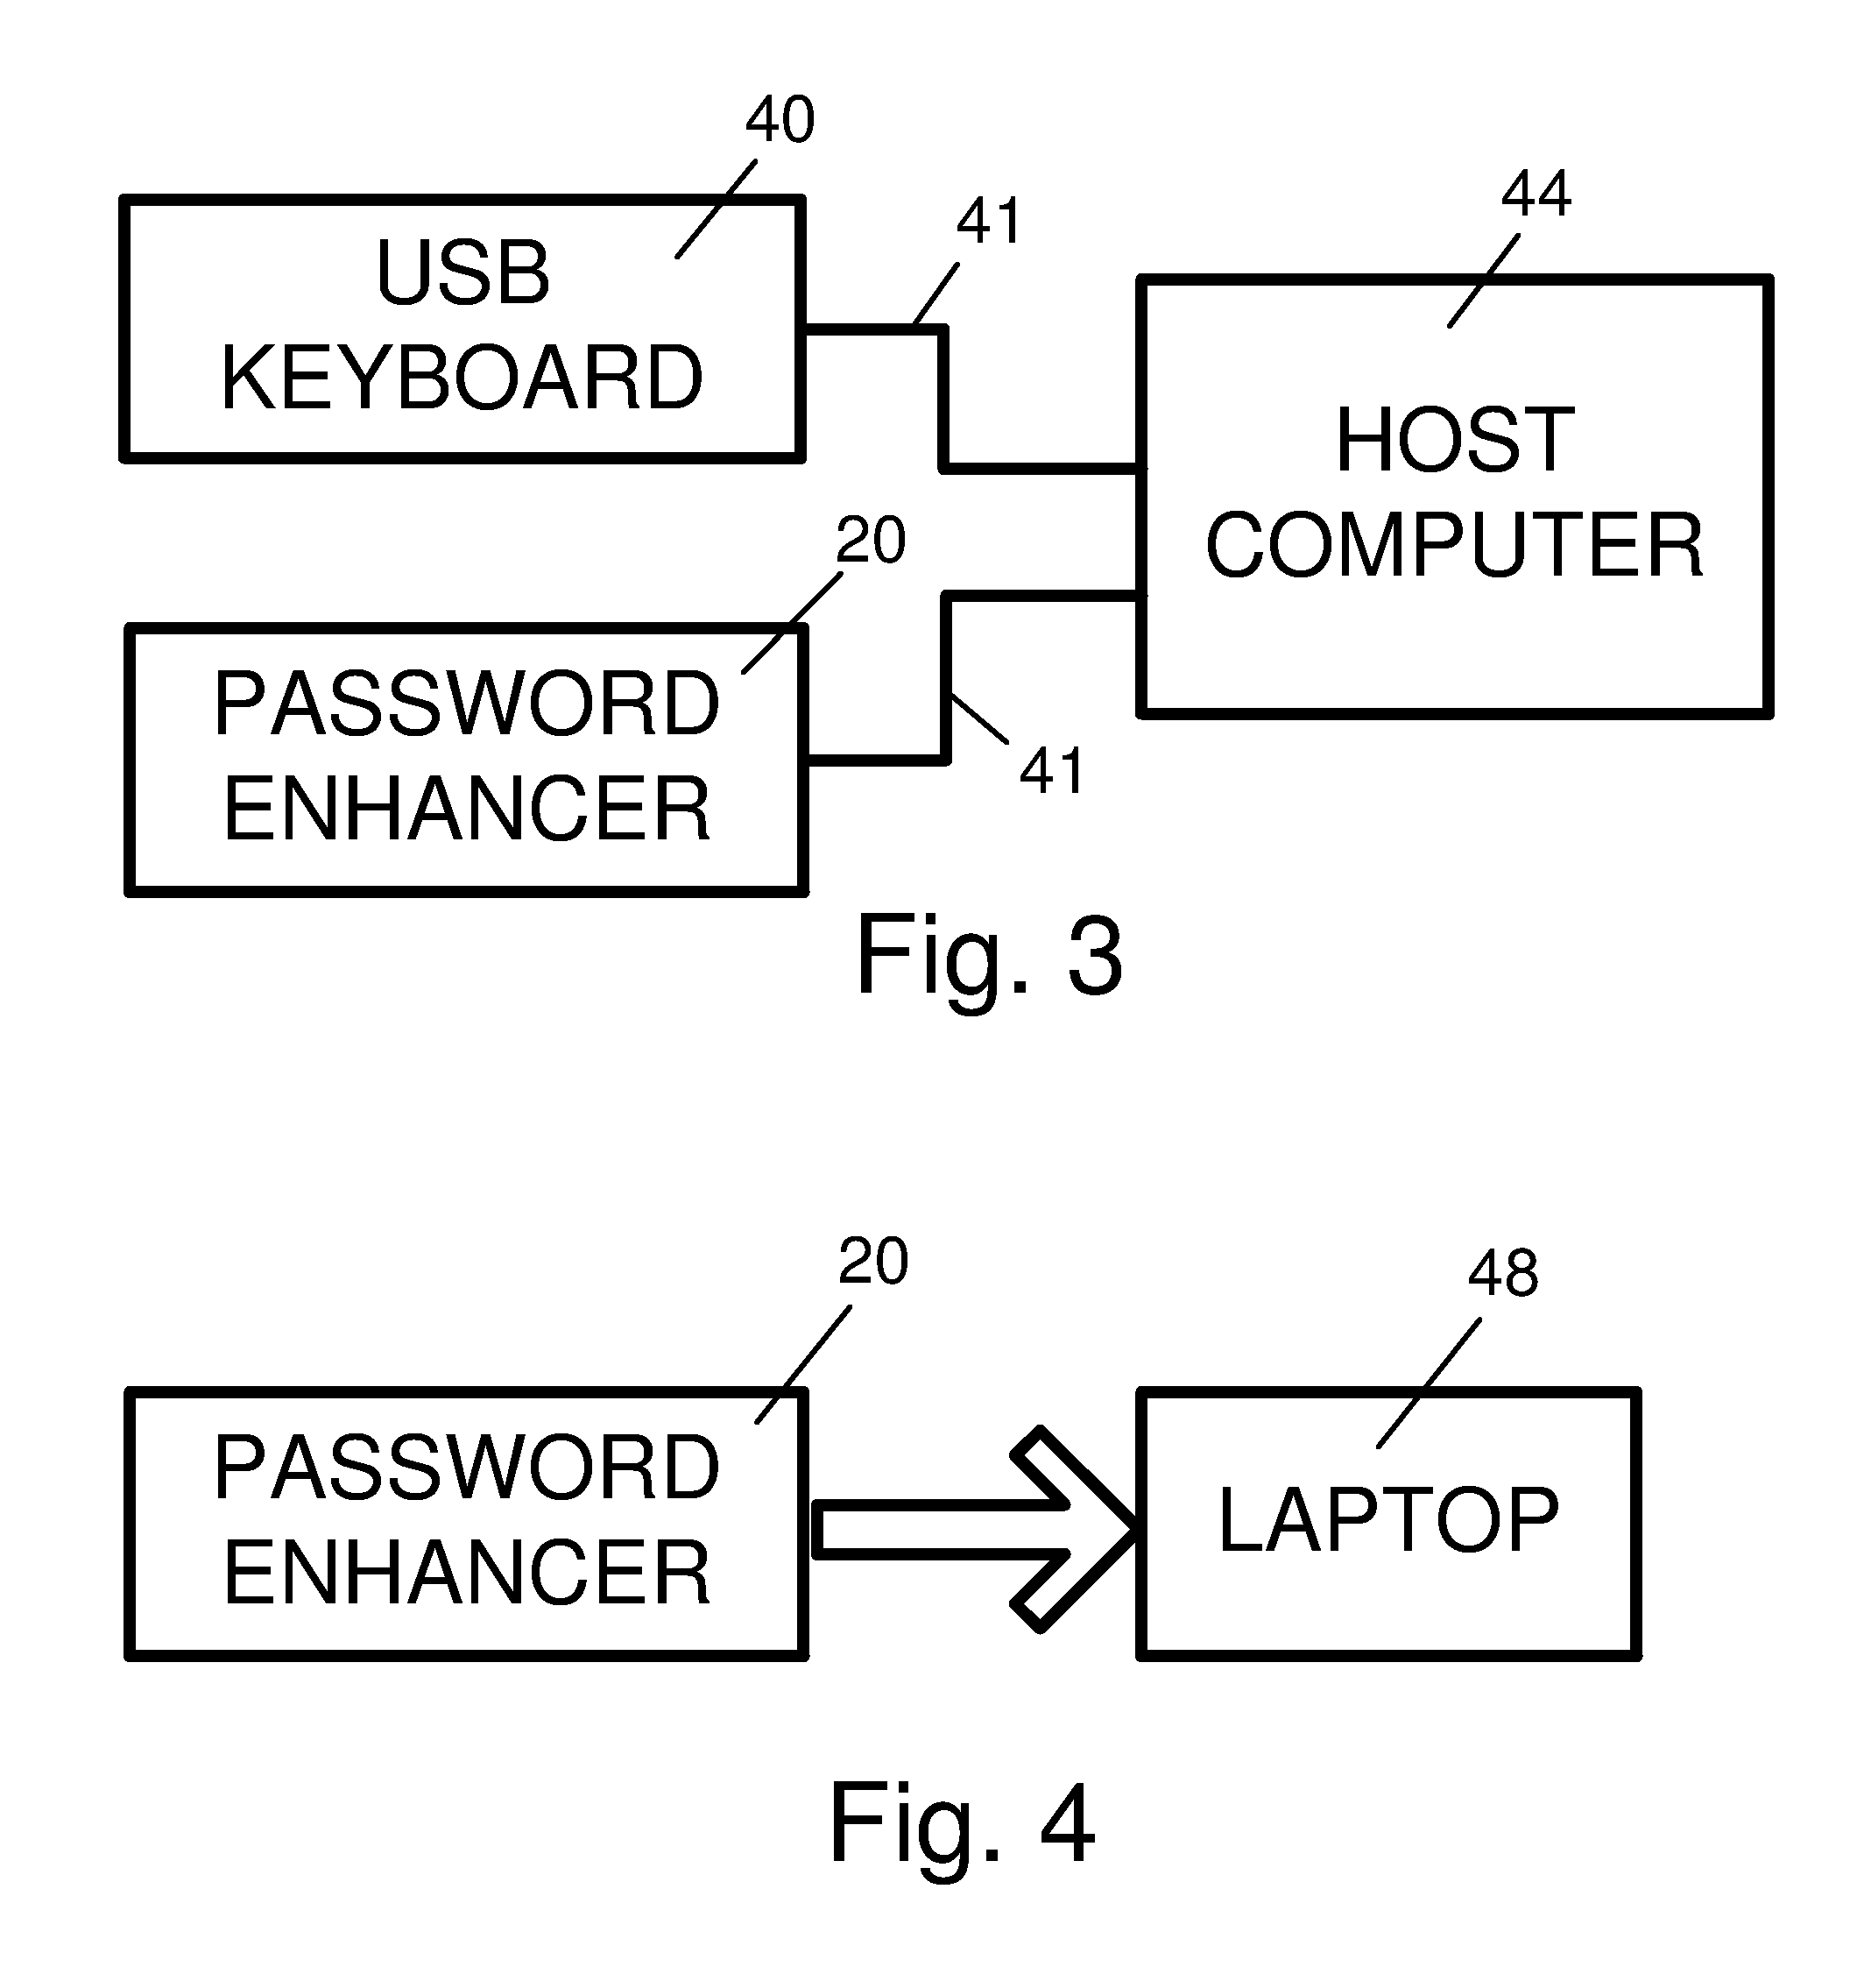 Password enhancing device